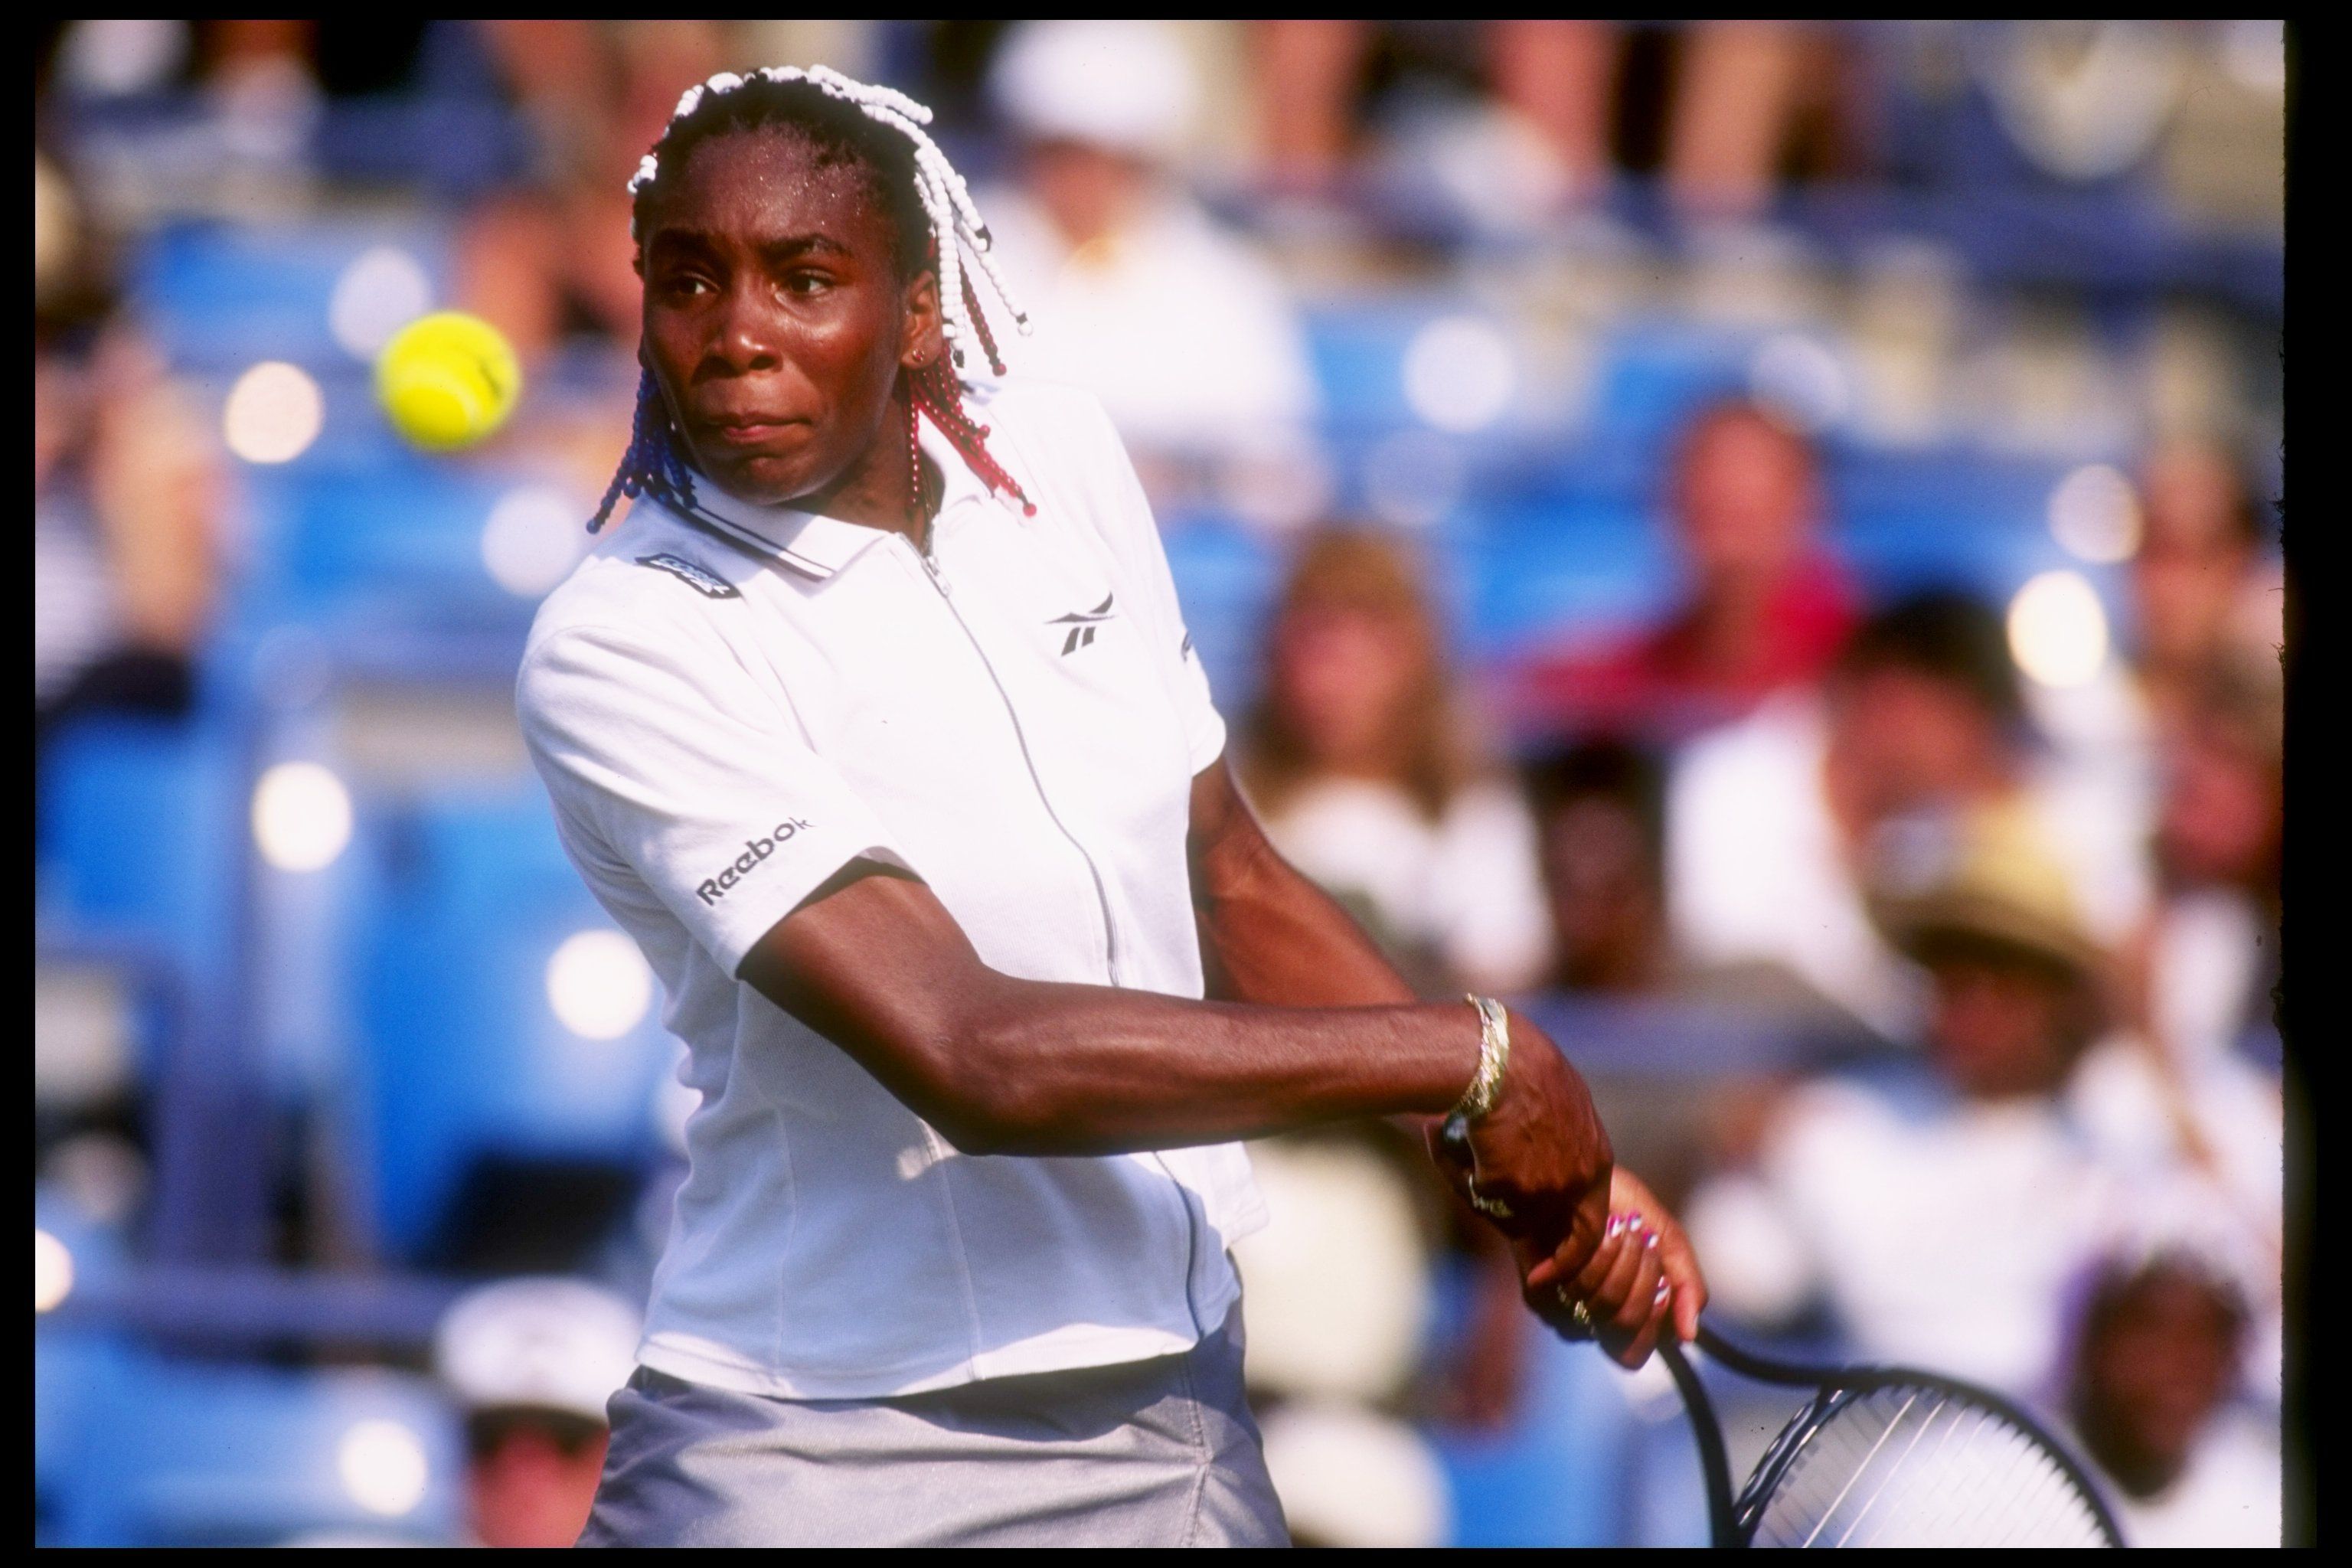 Venus Williams at the US Open in 1997